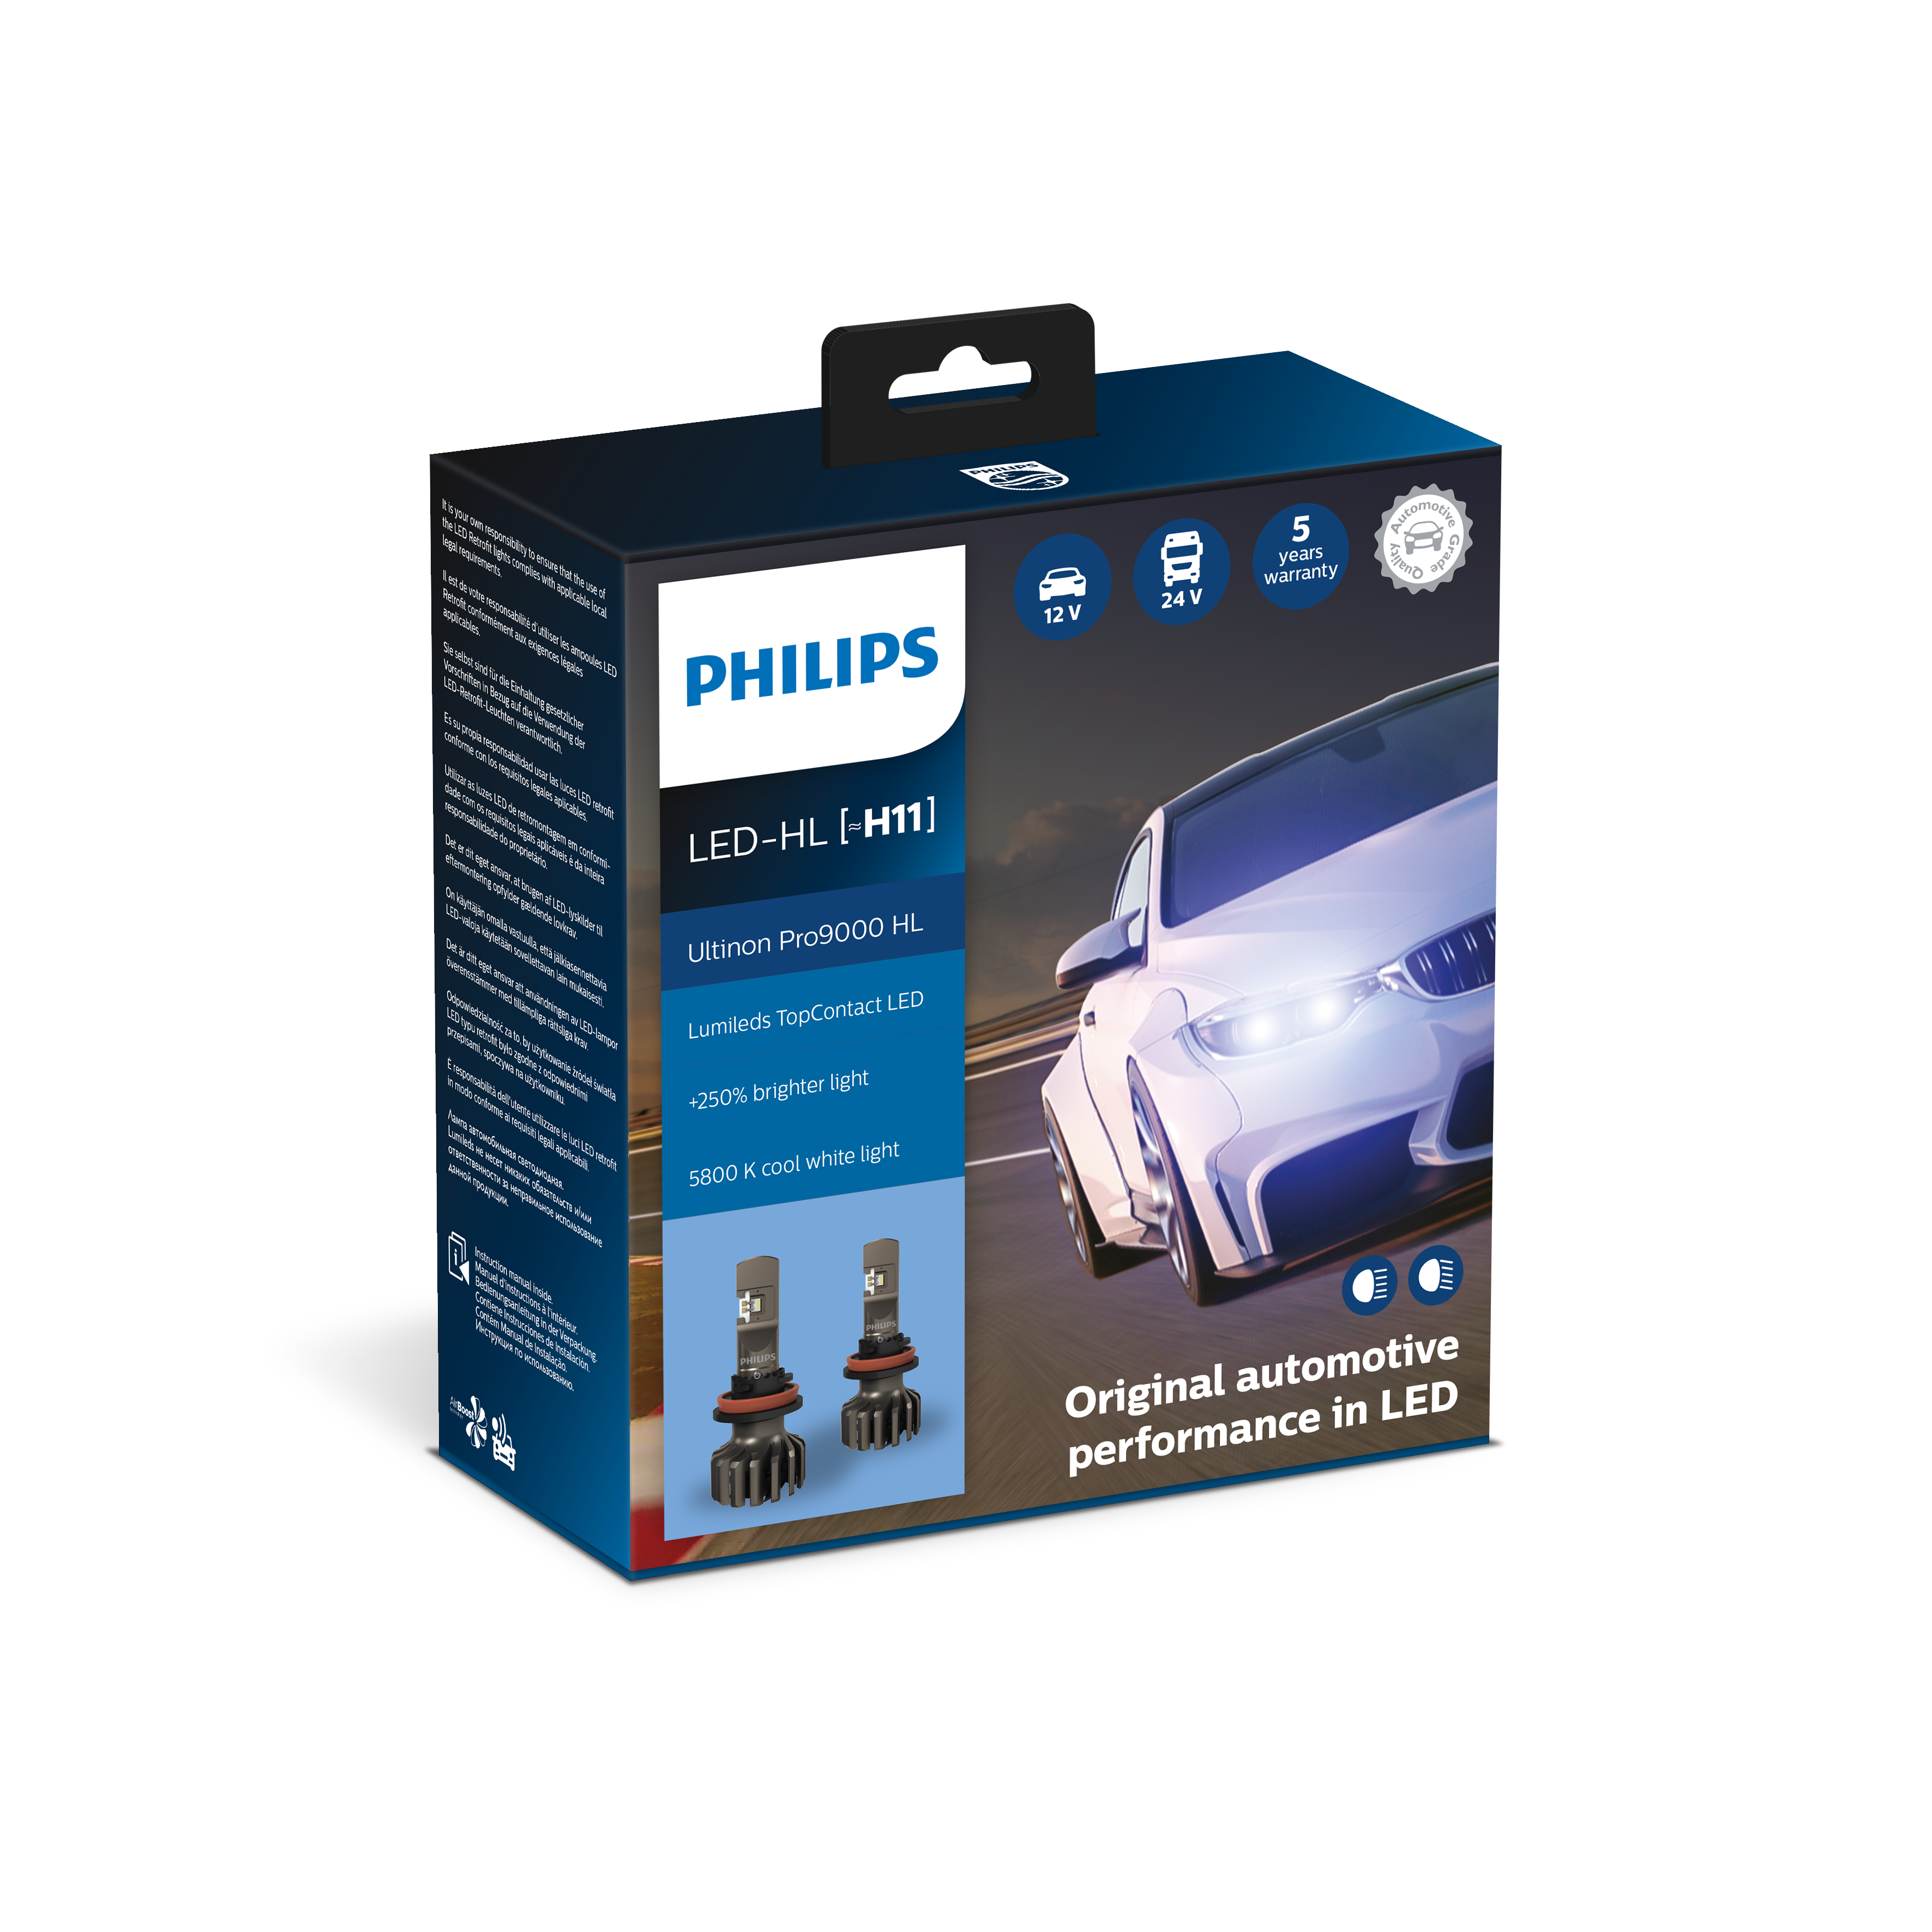 Led philips 12v. Philips Ultinon 9000 h7. Philips Ultinon pro9000. Лампа автомобильная Philips Ultinon pro9000 hl led h7. Philips Ultinon pro9000 h1.